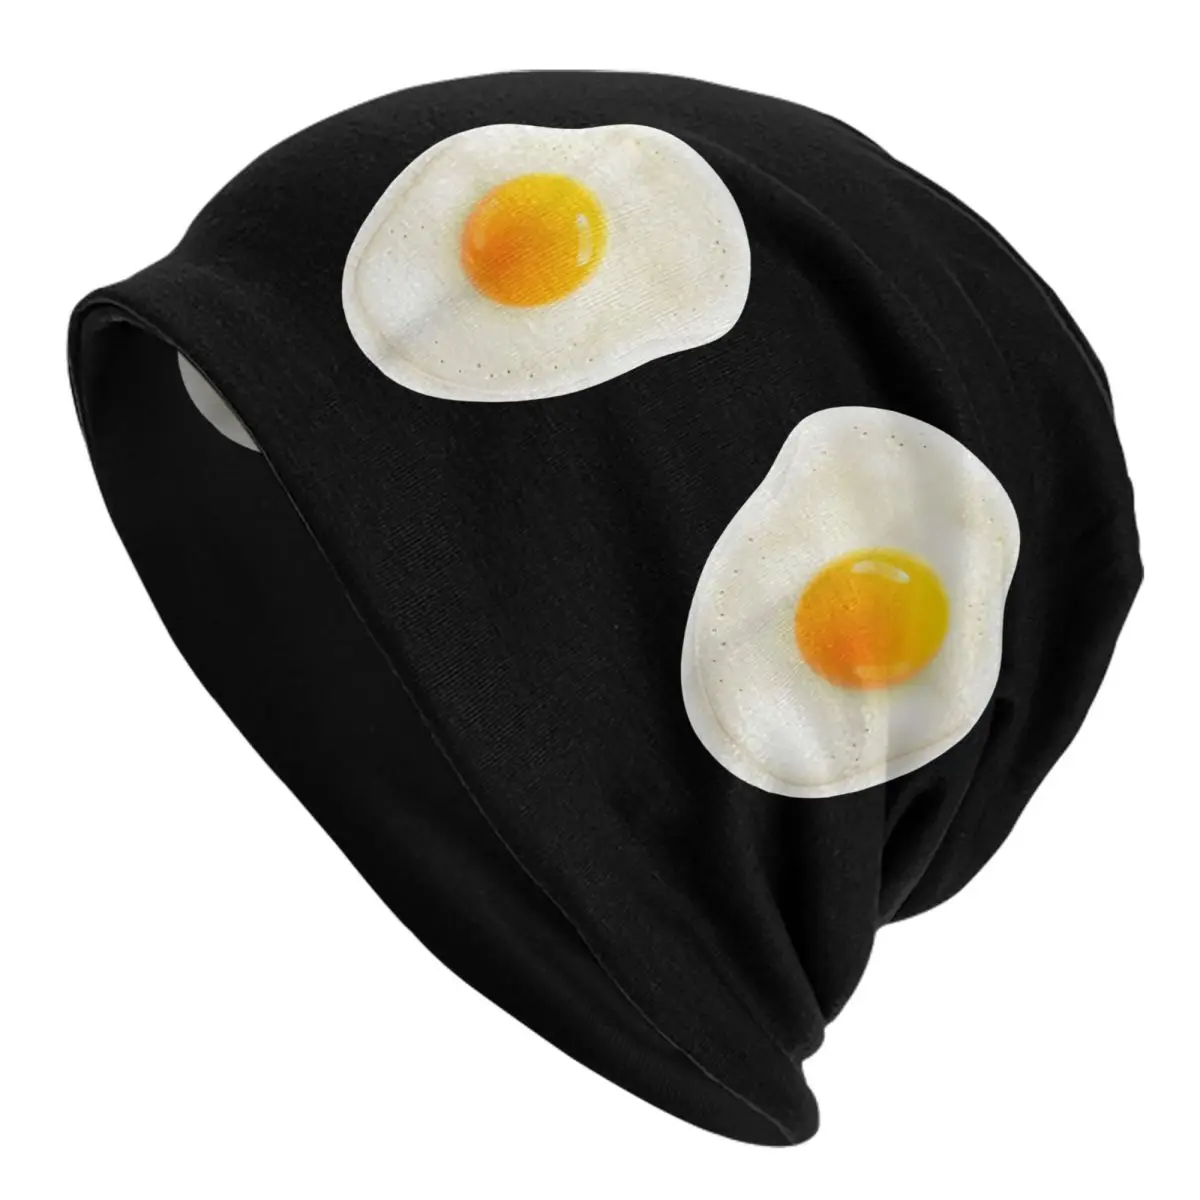 Fried Eggs,Egg,Boobs,Bikini Adult Men's Women's Knit Hat Keep warm winter Funny knitted hat